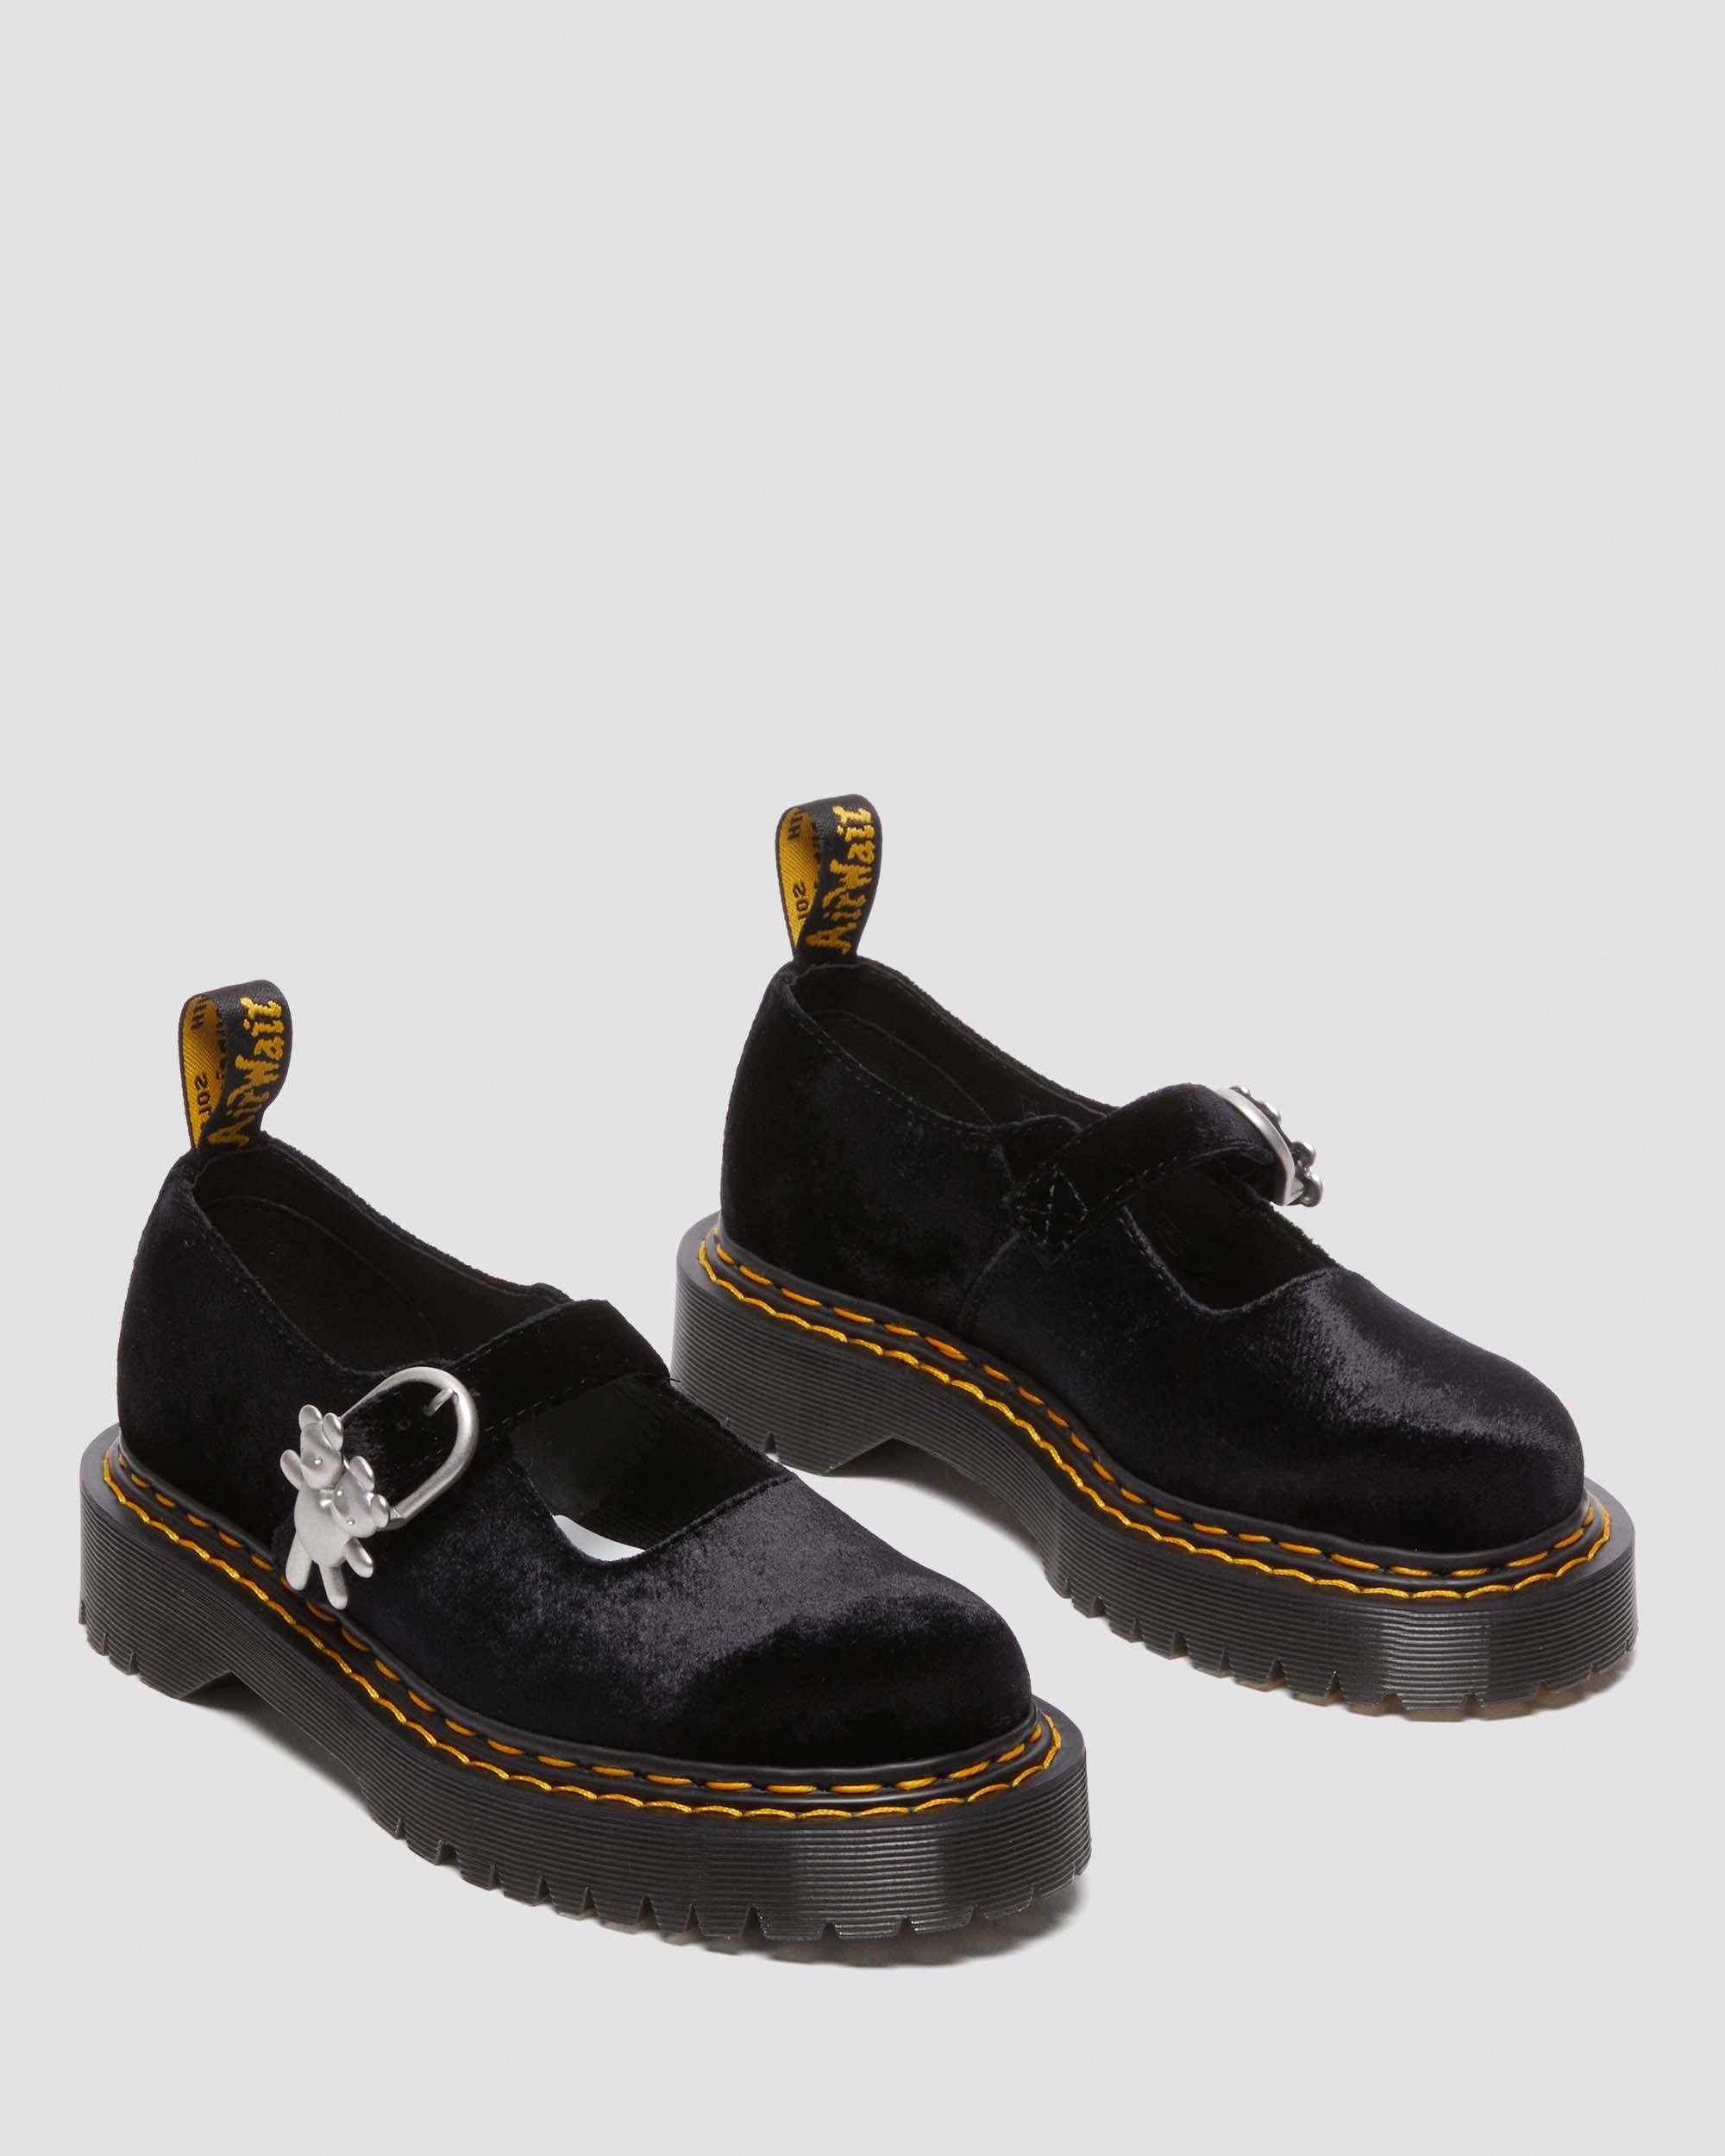 Addina Heaven by Marc Jacobs Velvet Shoes, Black | Dr. Martens